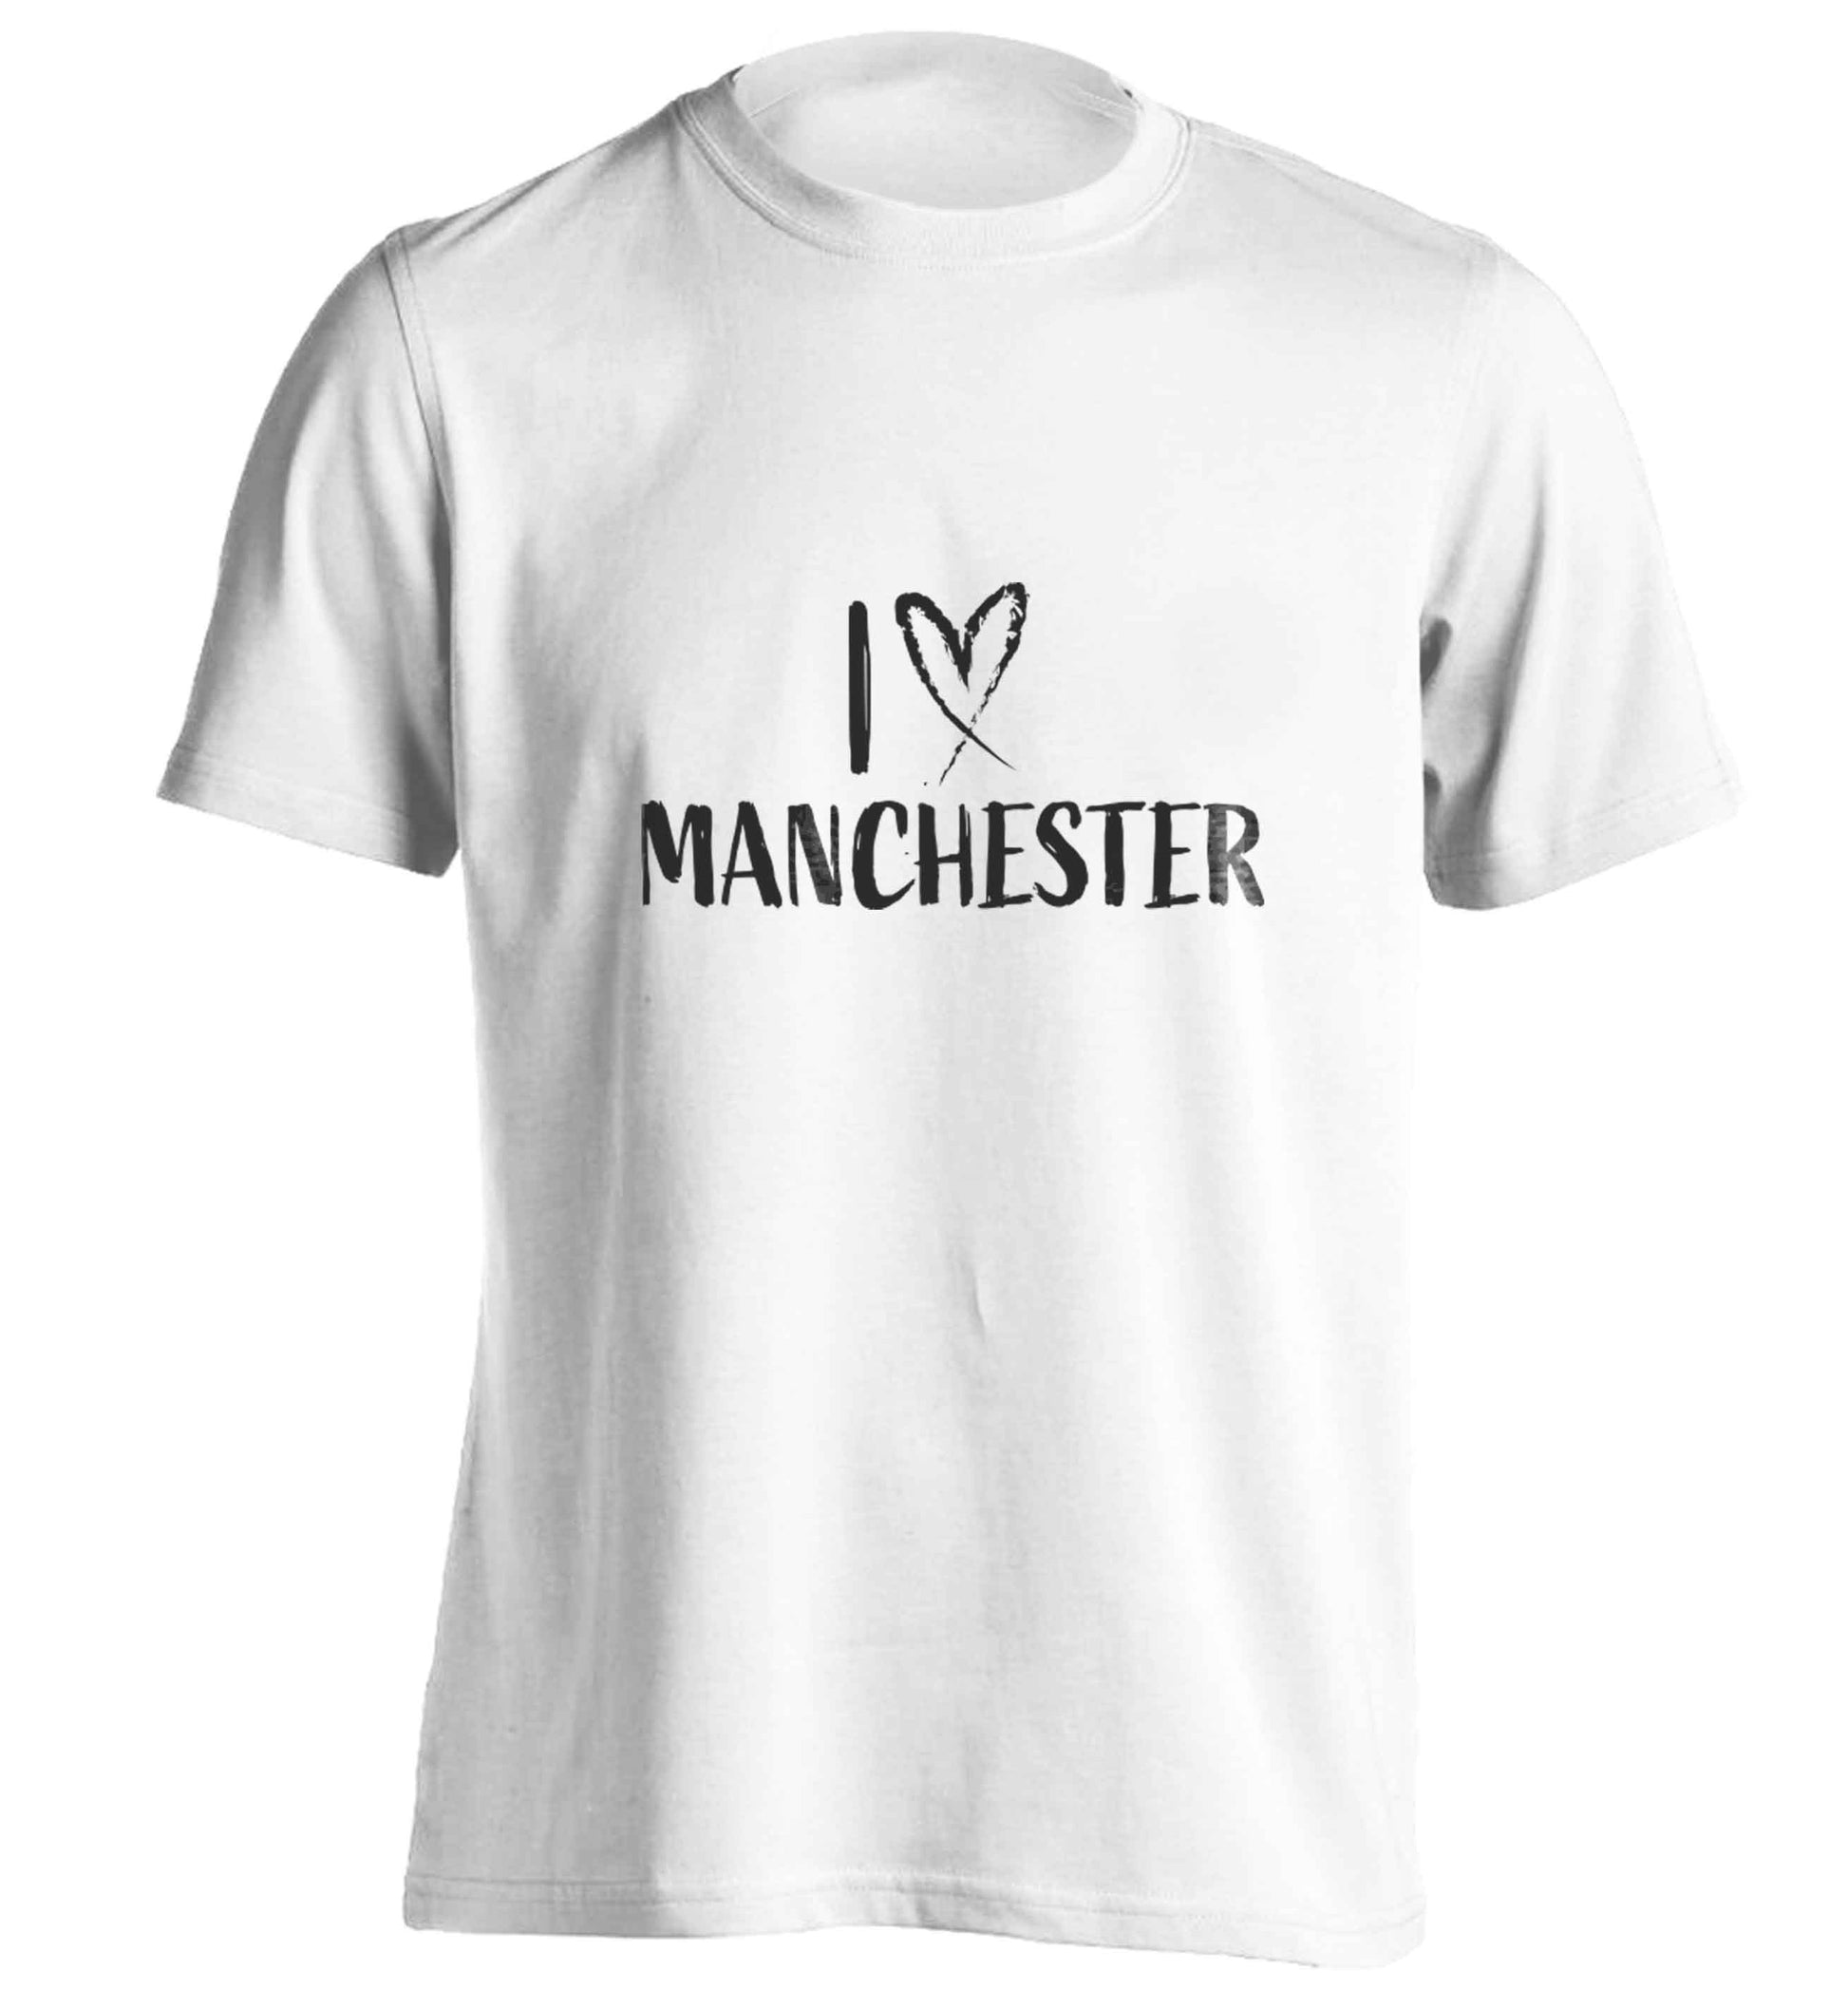 I love Manchester adults unisex white Tshirt 2XL